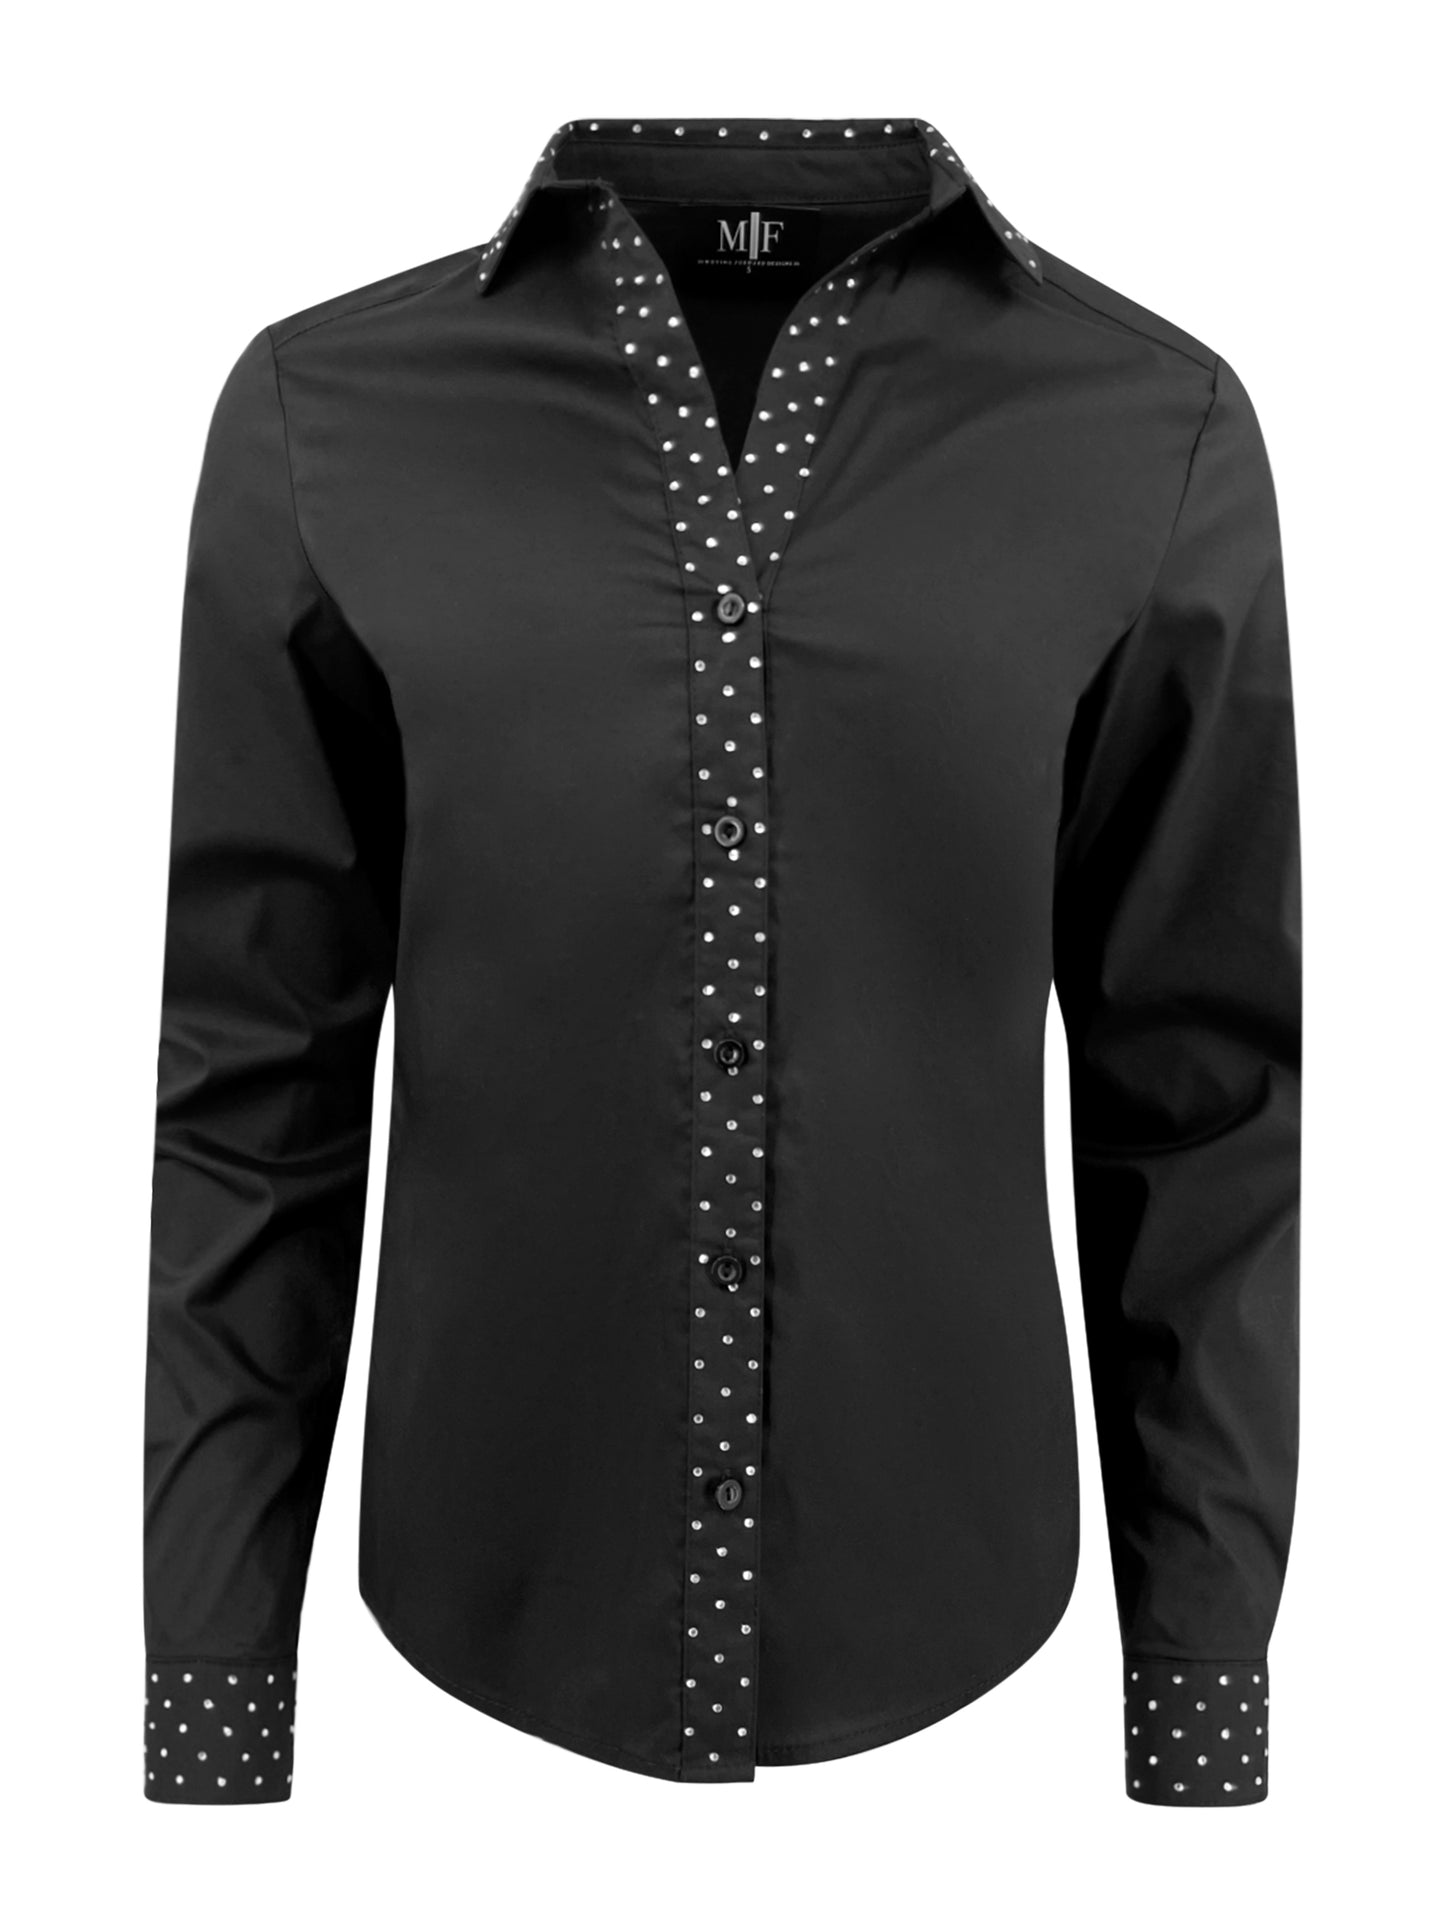 SMALL, MEDIUM, or LARGE Shirt, Button Down, Black, Crystal Collar & Cuff